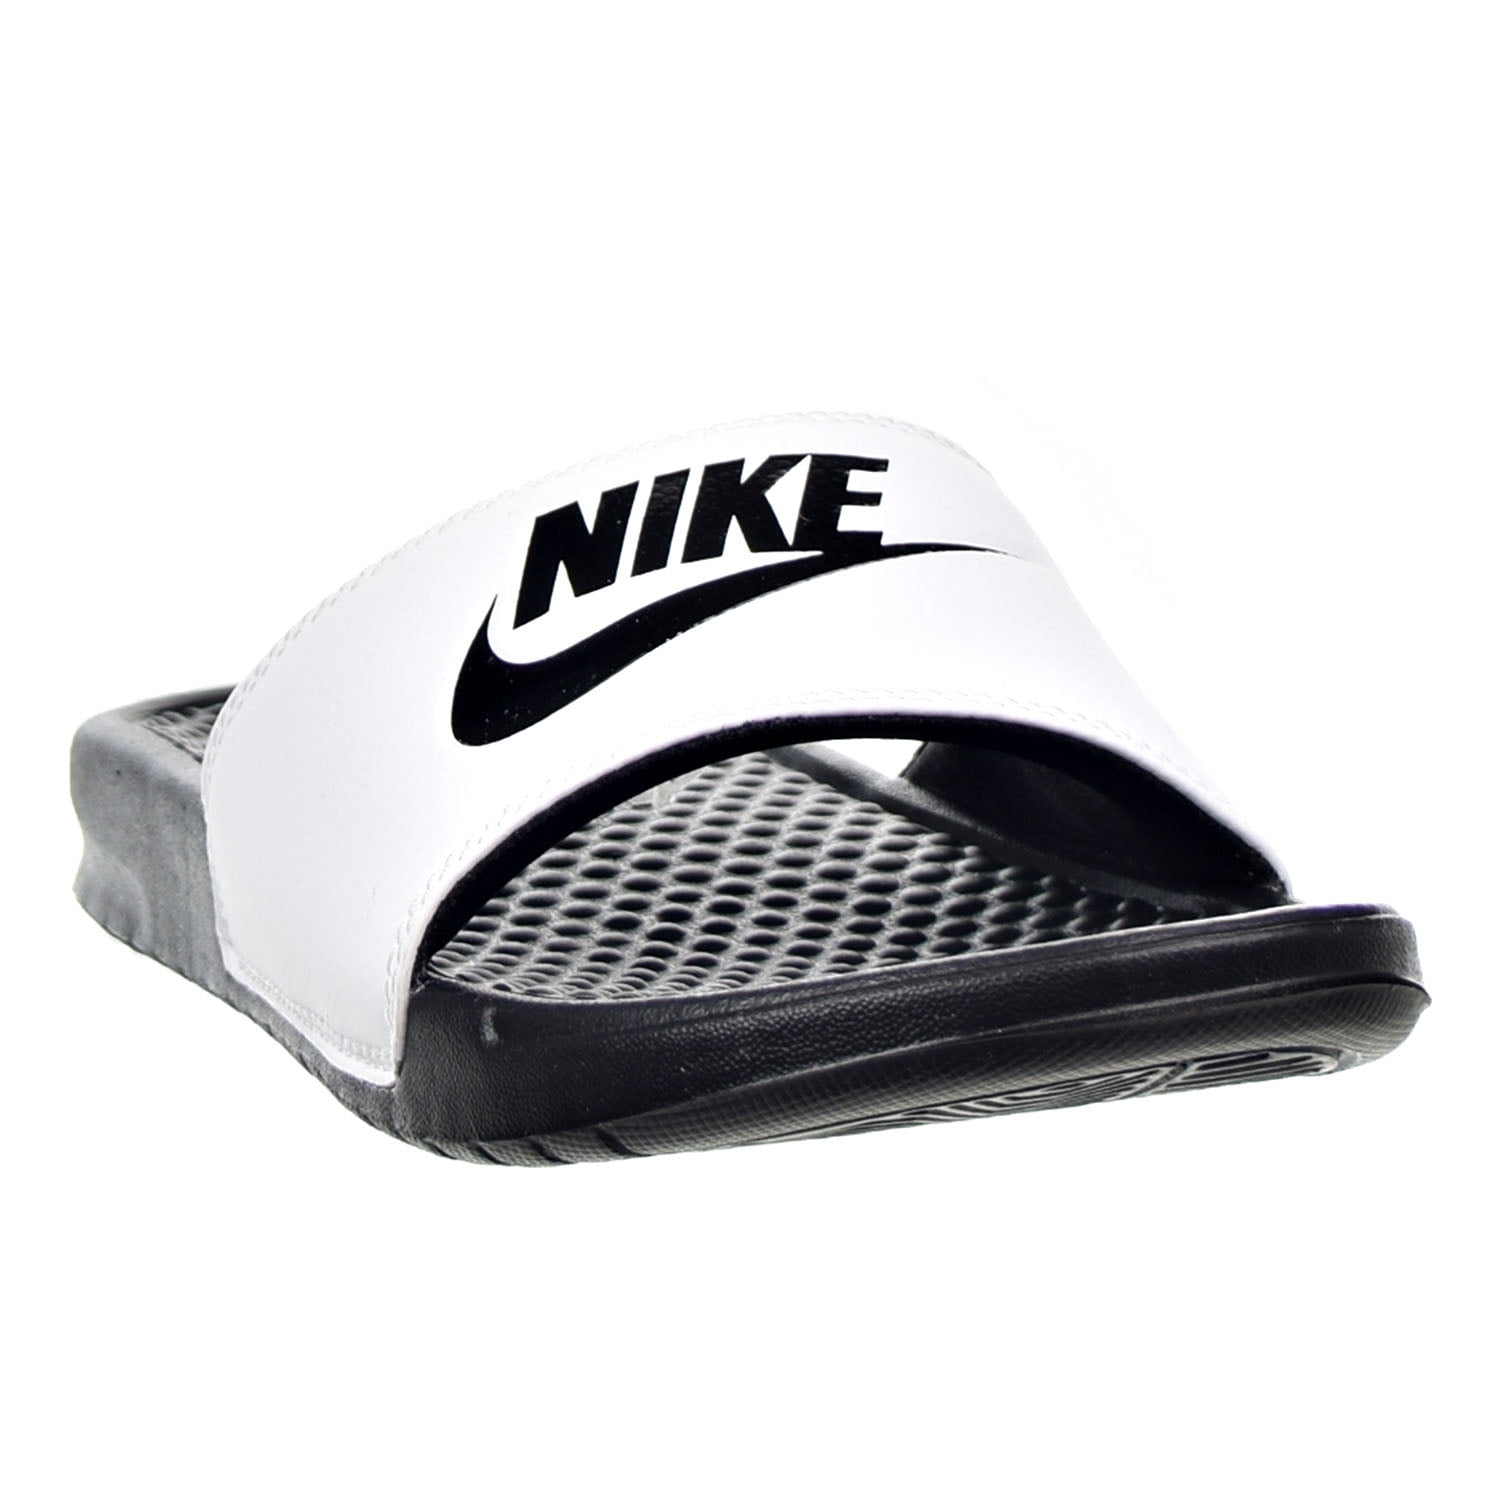 Nike Benassi JDI Sandals White/Black 343880-100 - Walmart.com